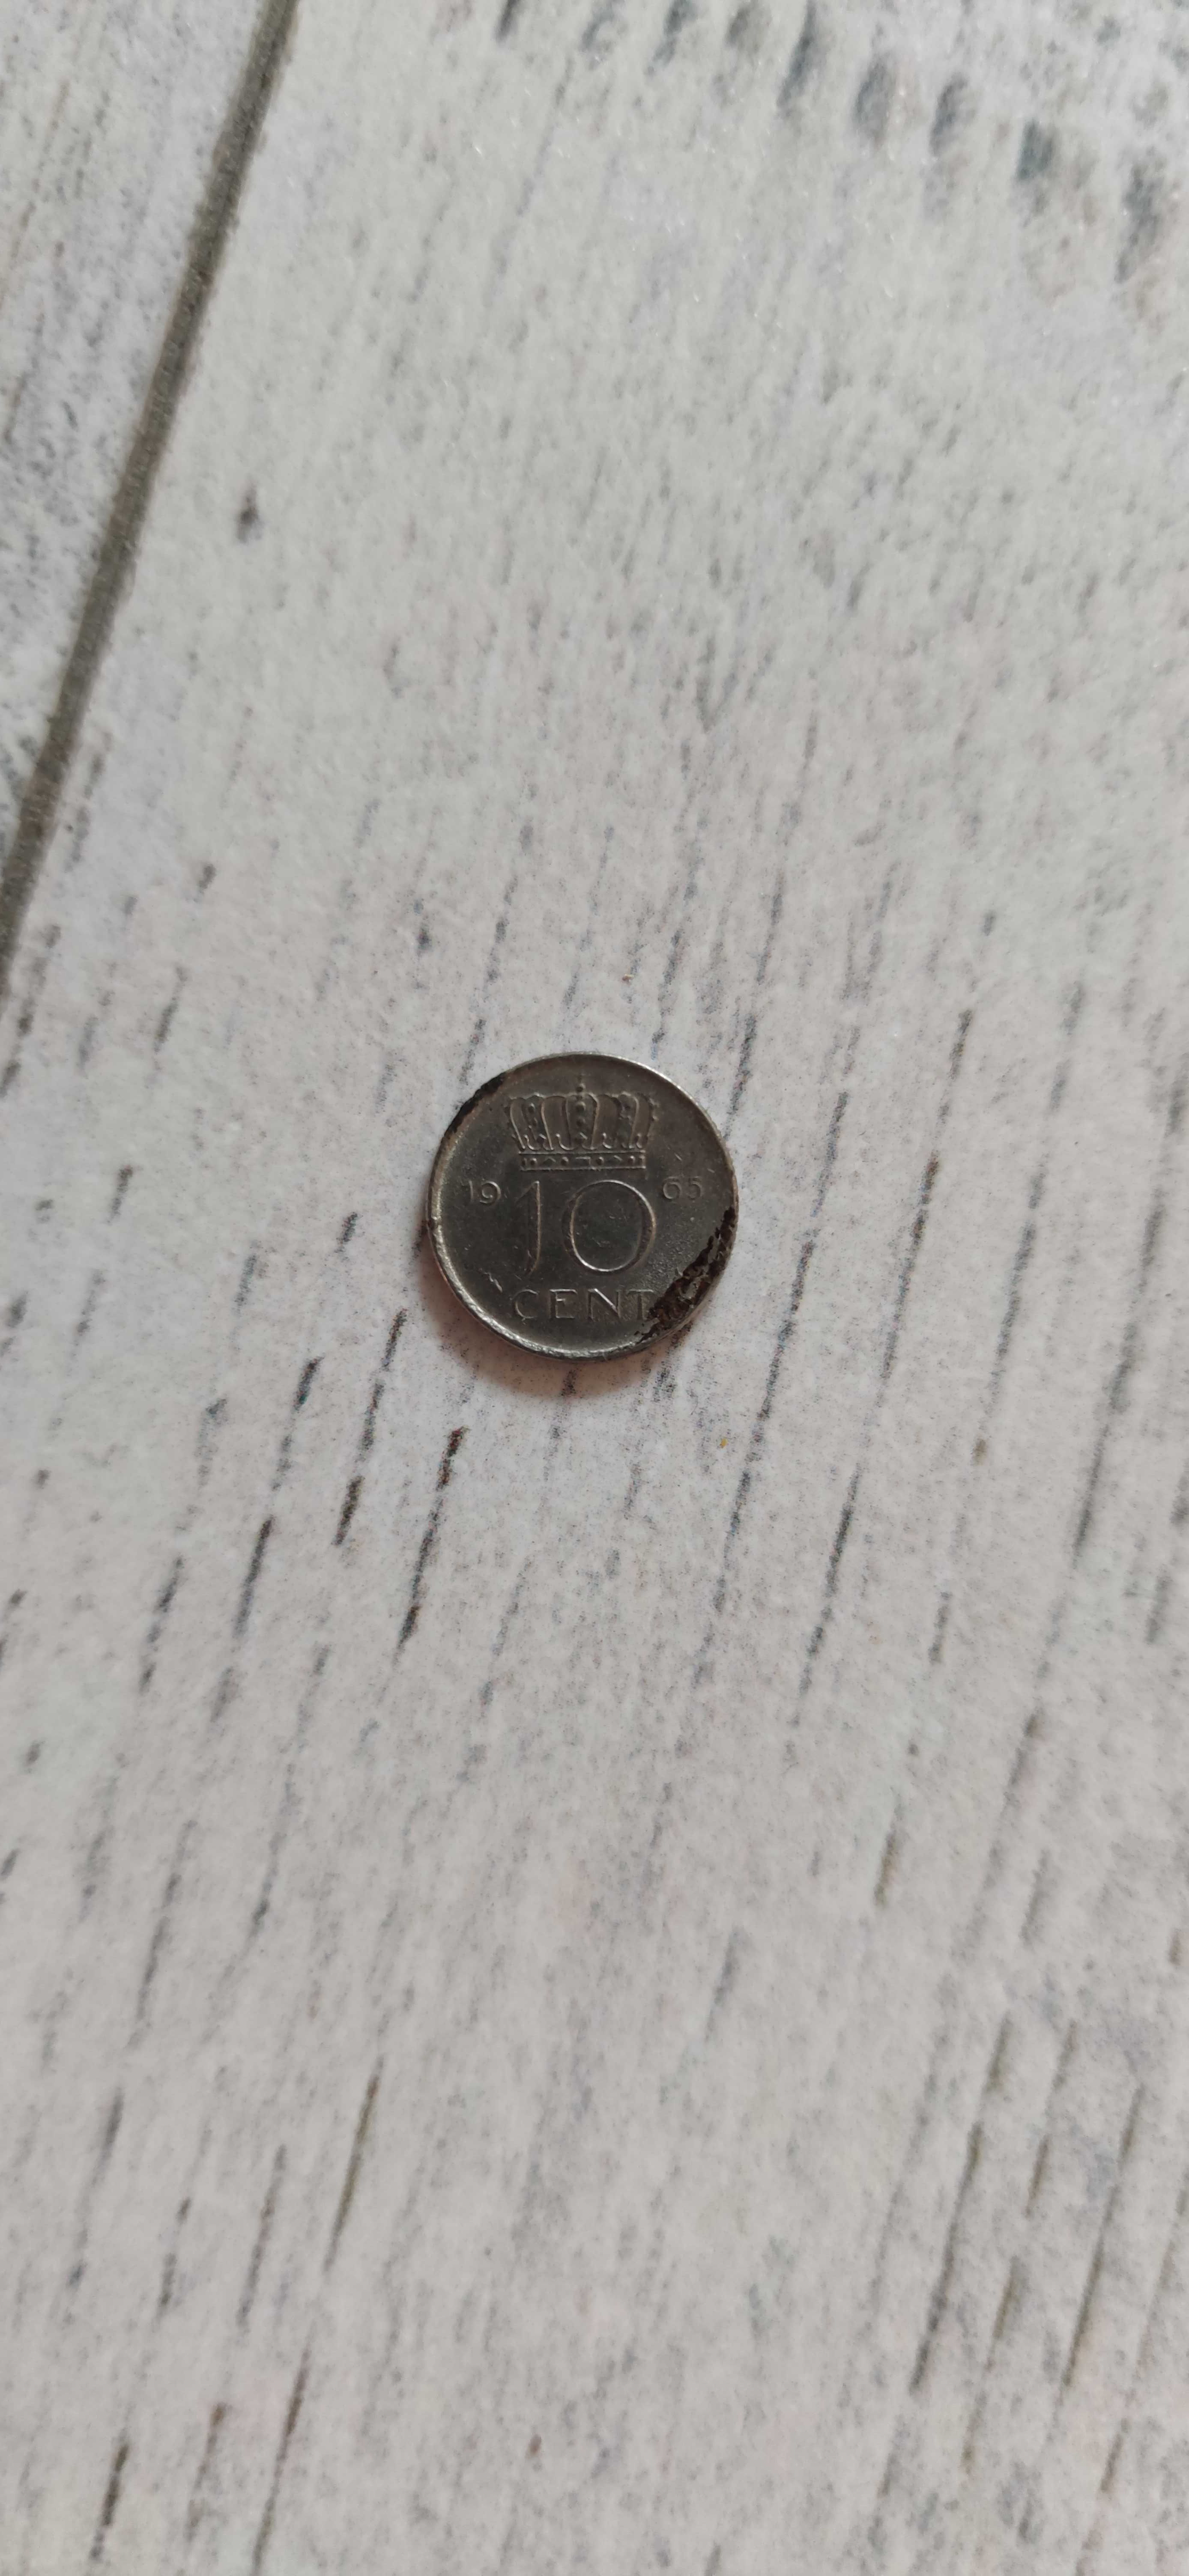 Нидерланды 10 центов, 1965